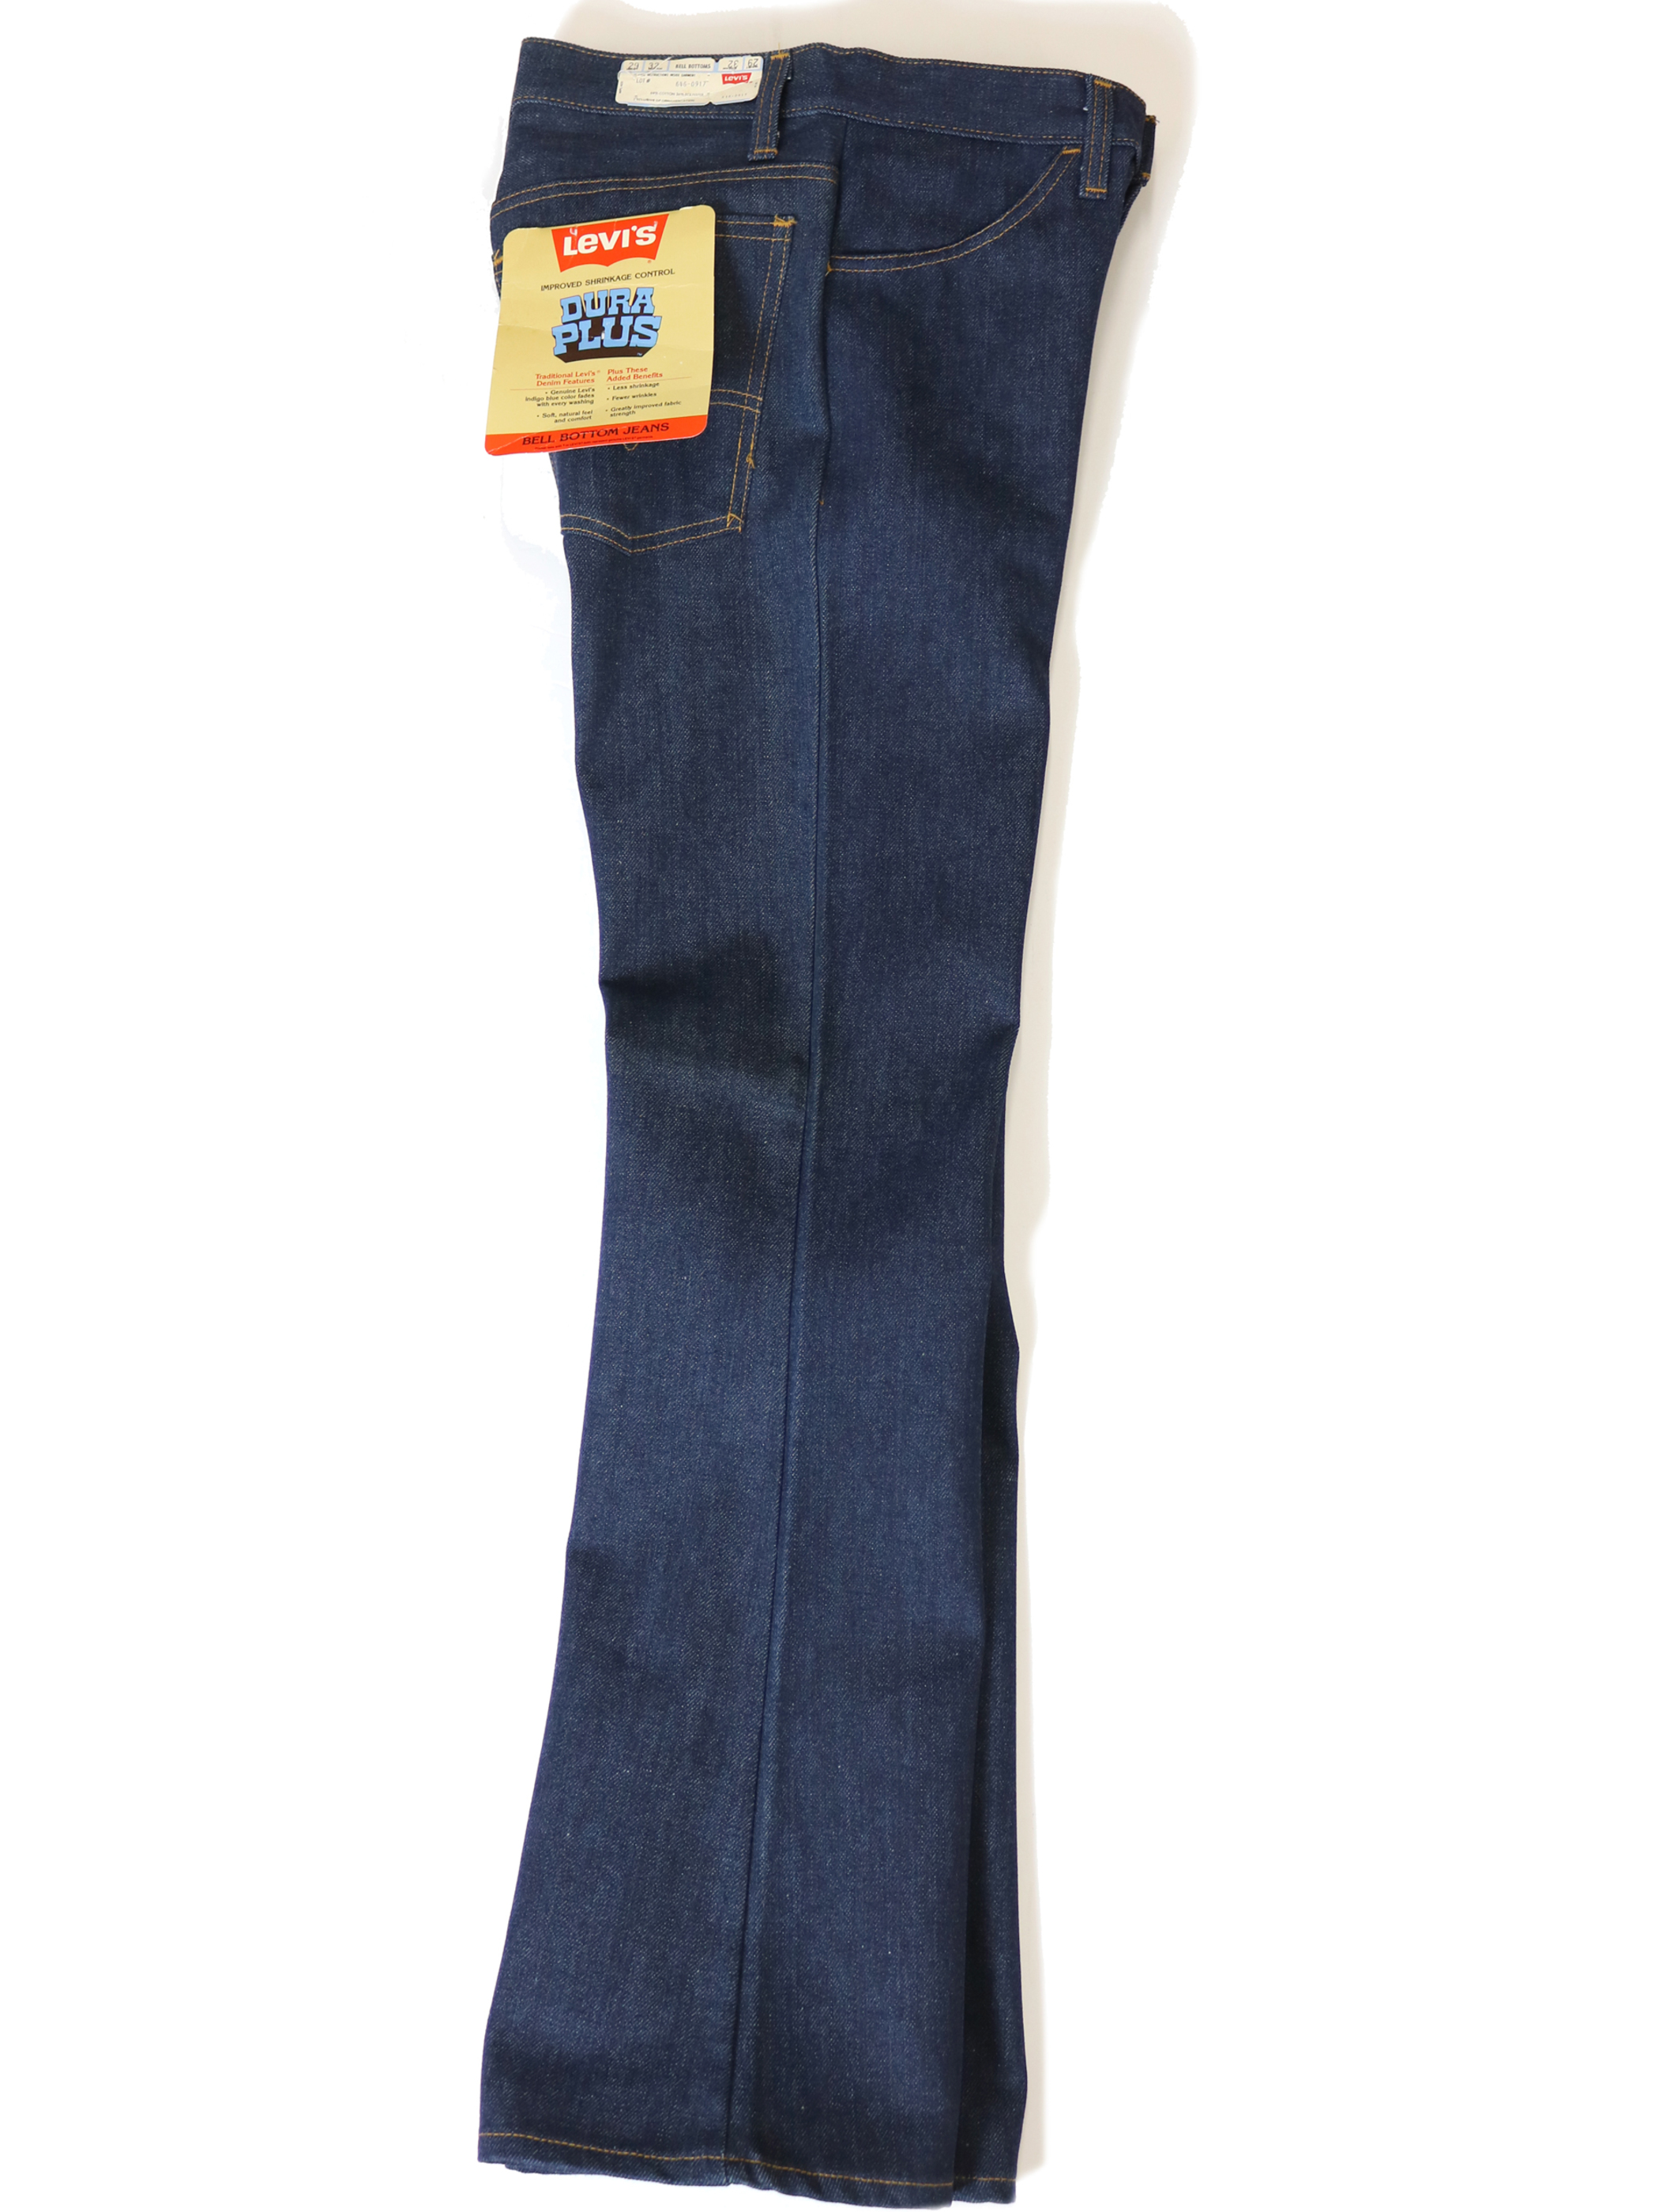 levi's 1974 bell bottom jeans